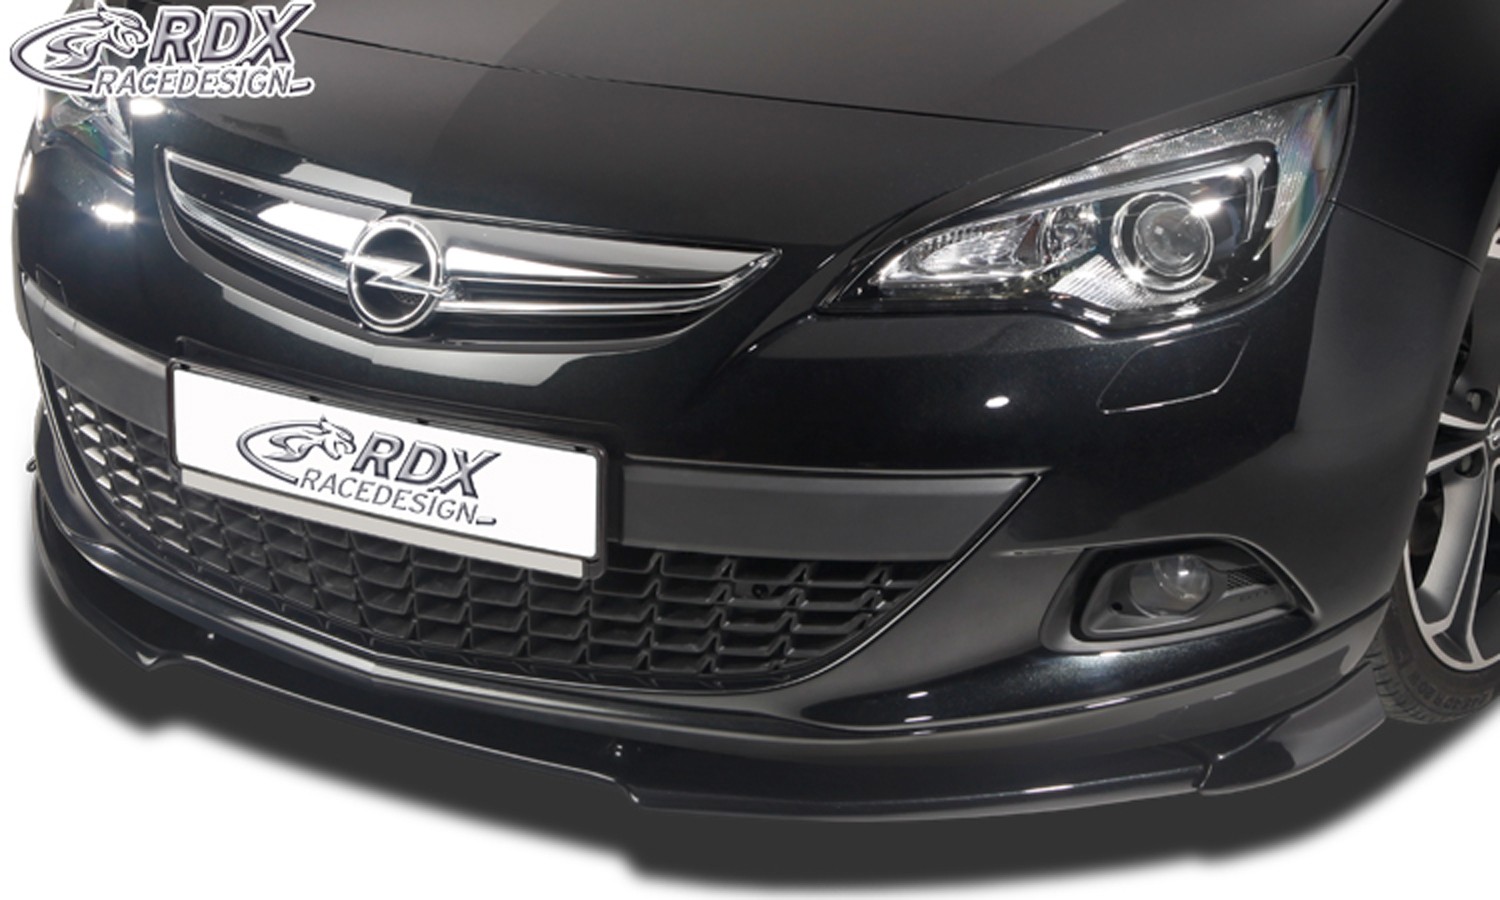 VARIO-X Frontspoiler Opel Astra J GTC (aber nur für Fahrzeuge mit OPC-Line Frontlippe) Frontansatz